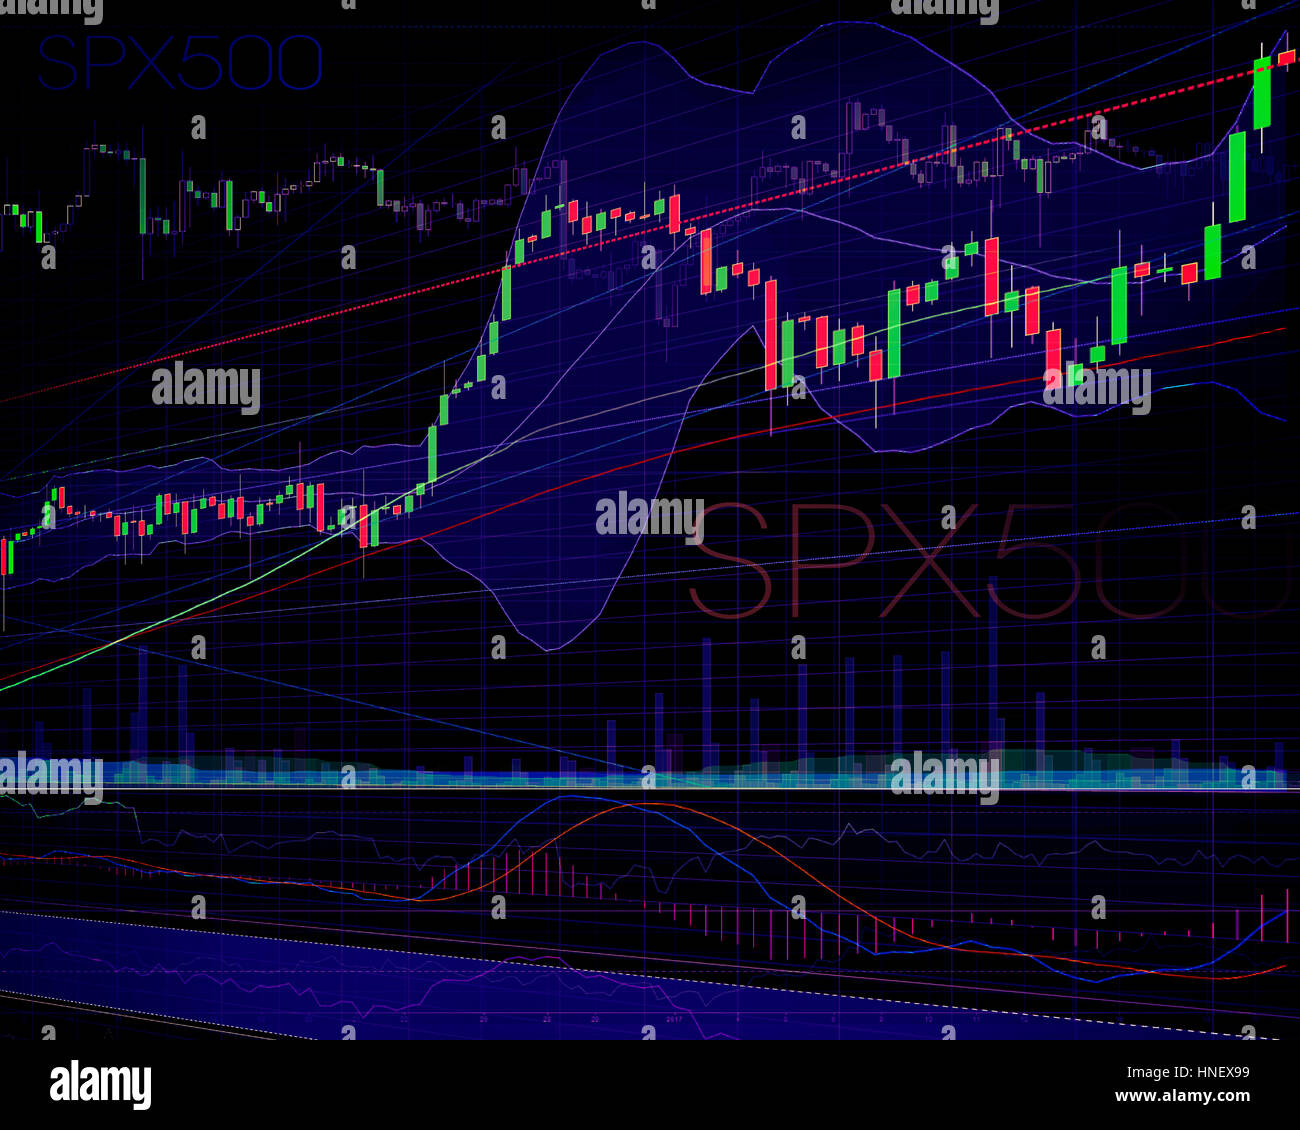 Stock Market Candlestick Chart Patterns